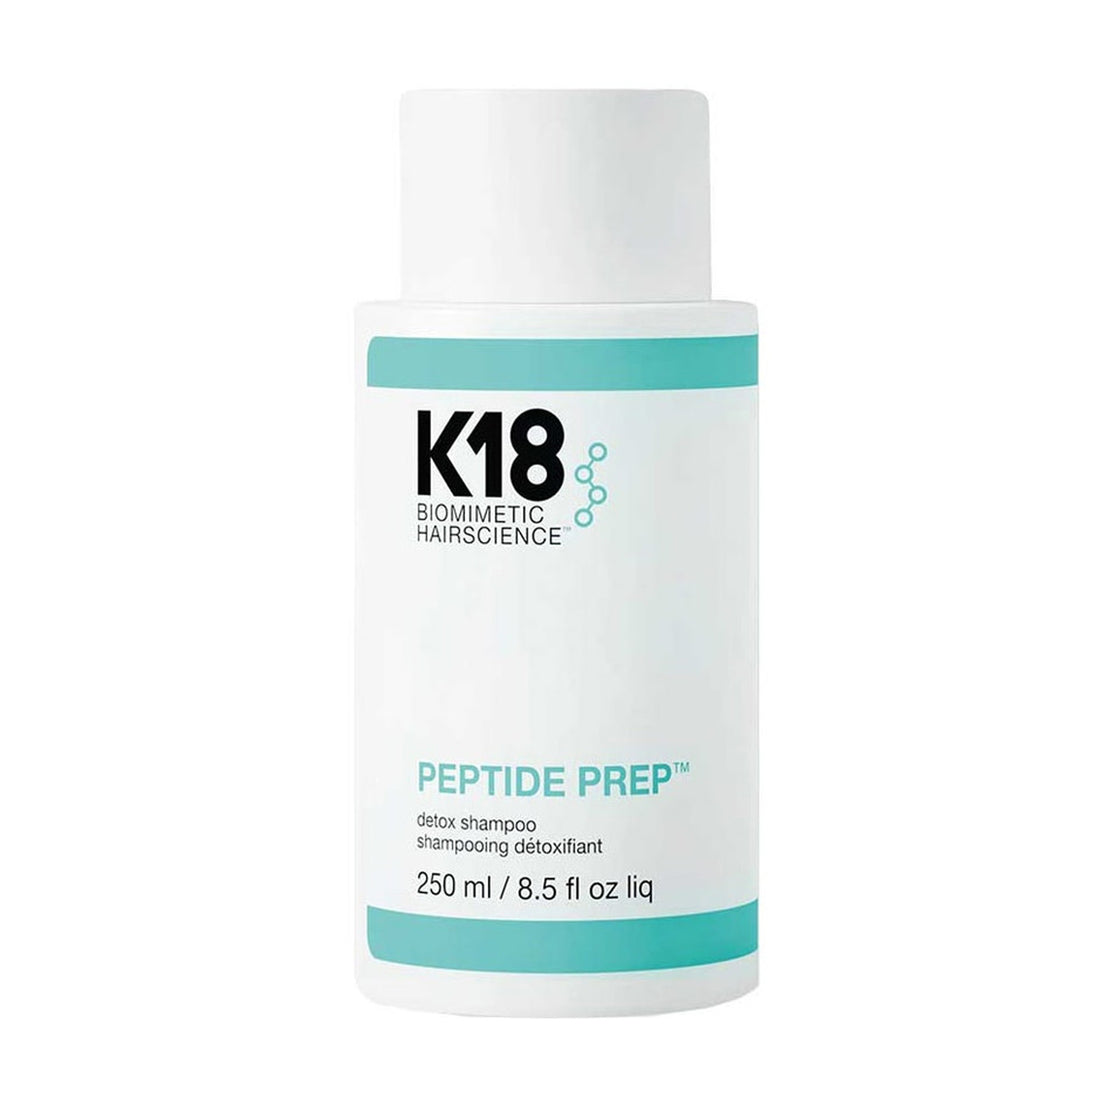 K18 Peptide Prep Detox Shampoo 250ml